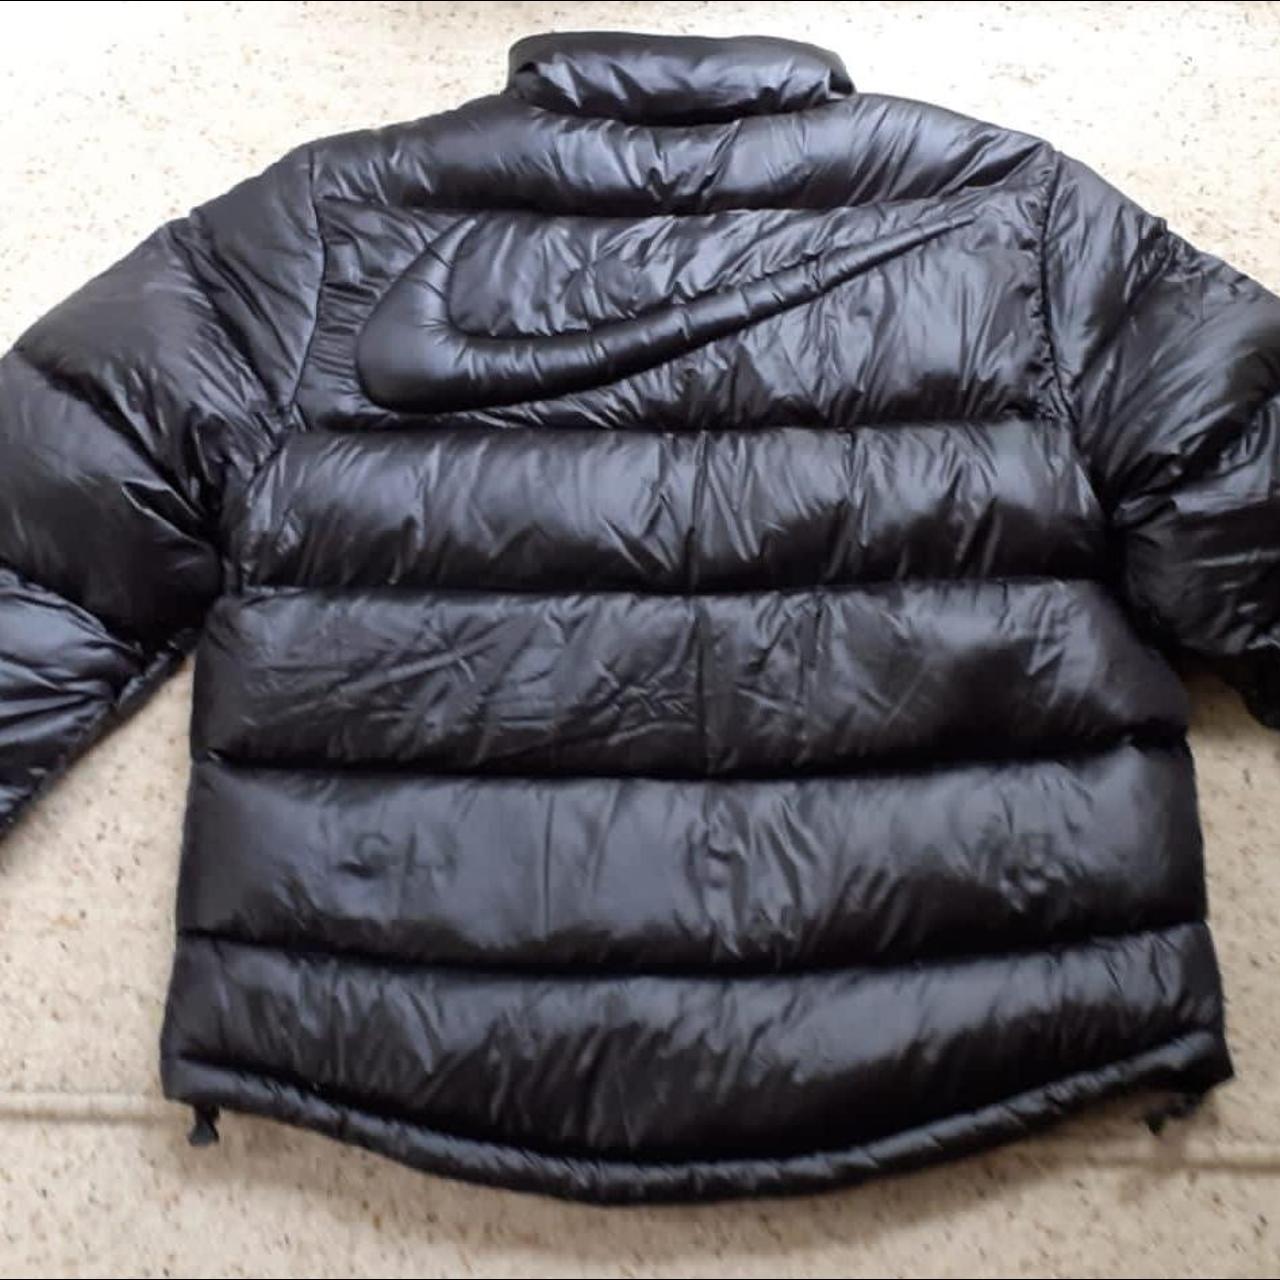 Nocta x nike puffer jacket Size medium No... - Depop